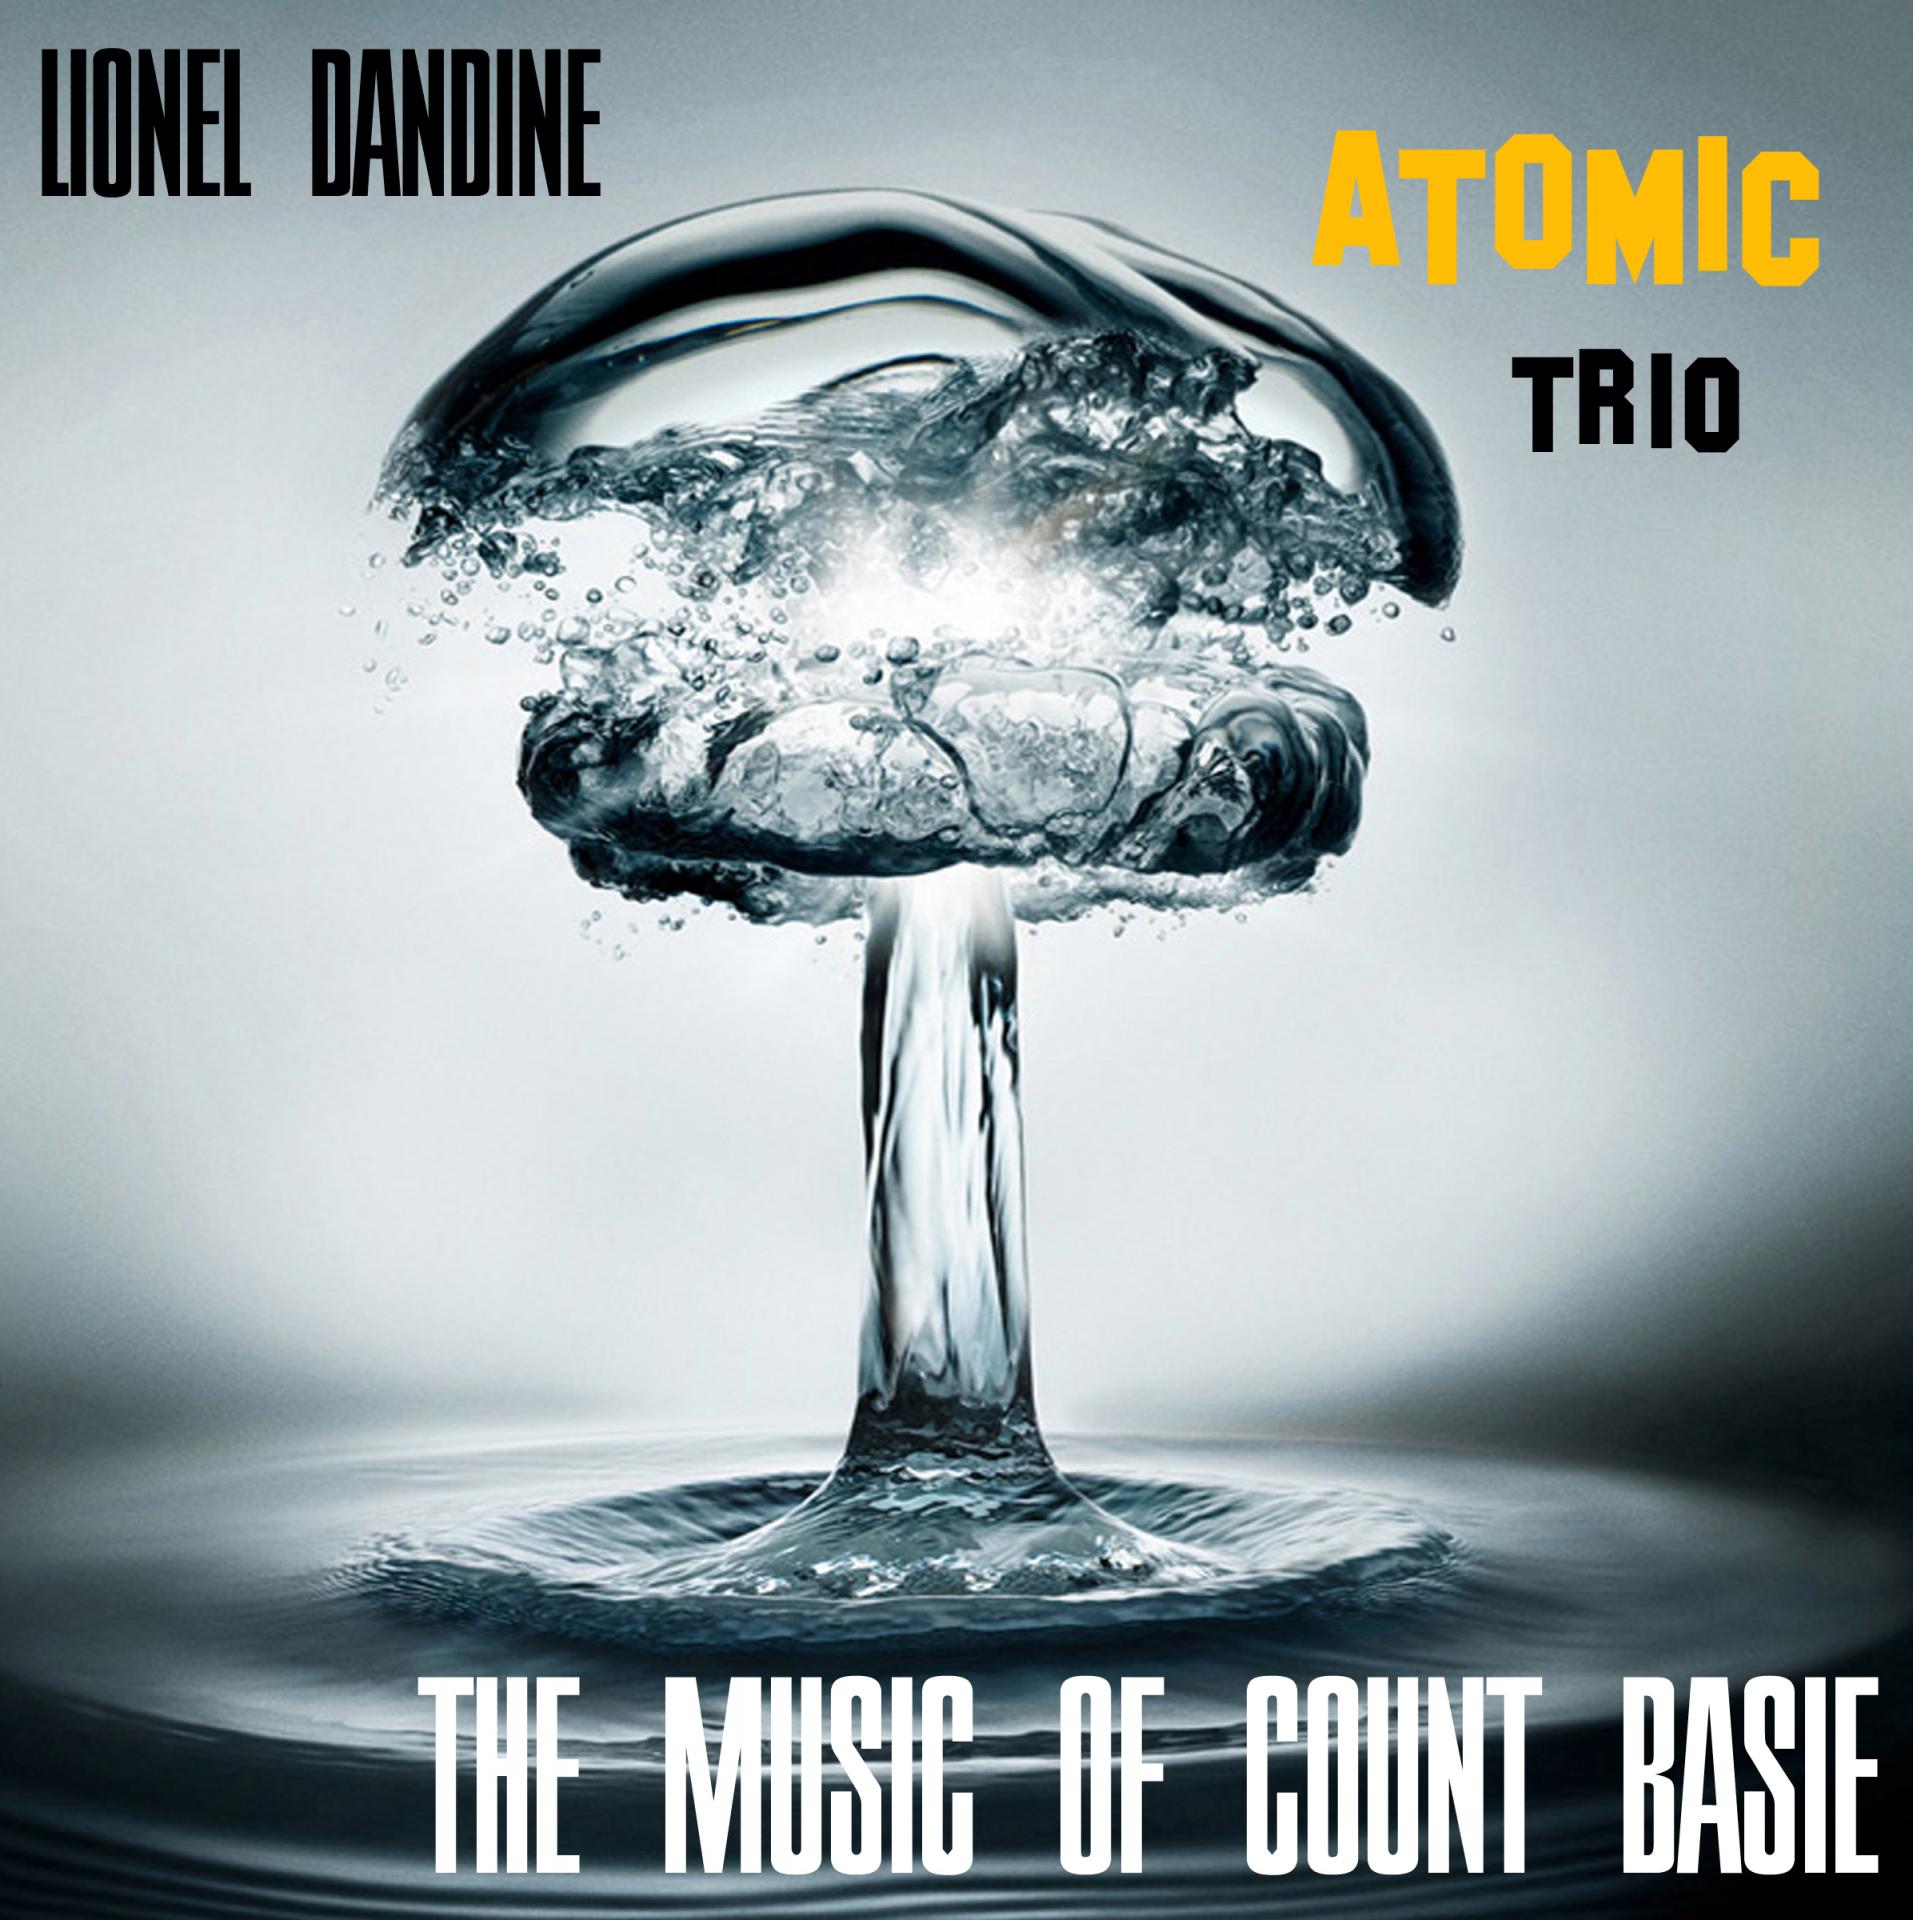 Atomic trio hd